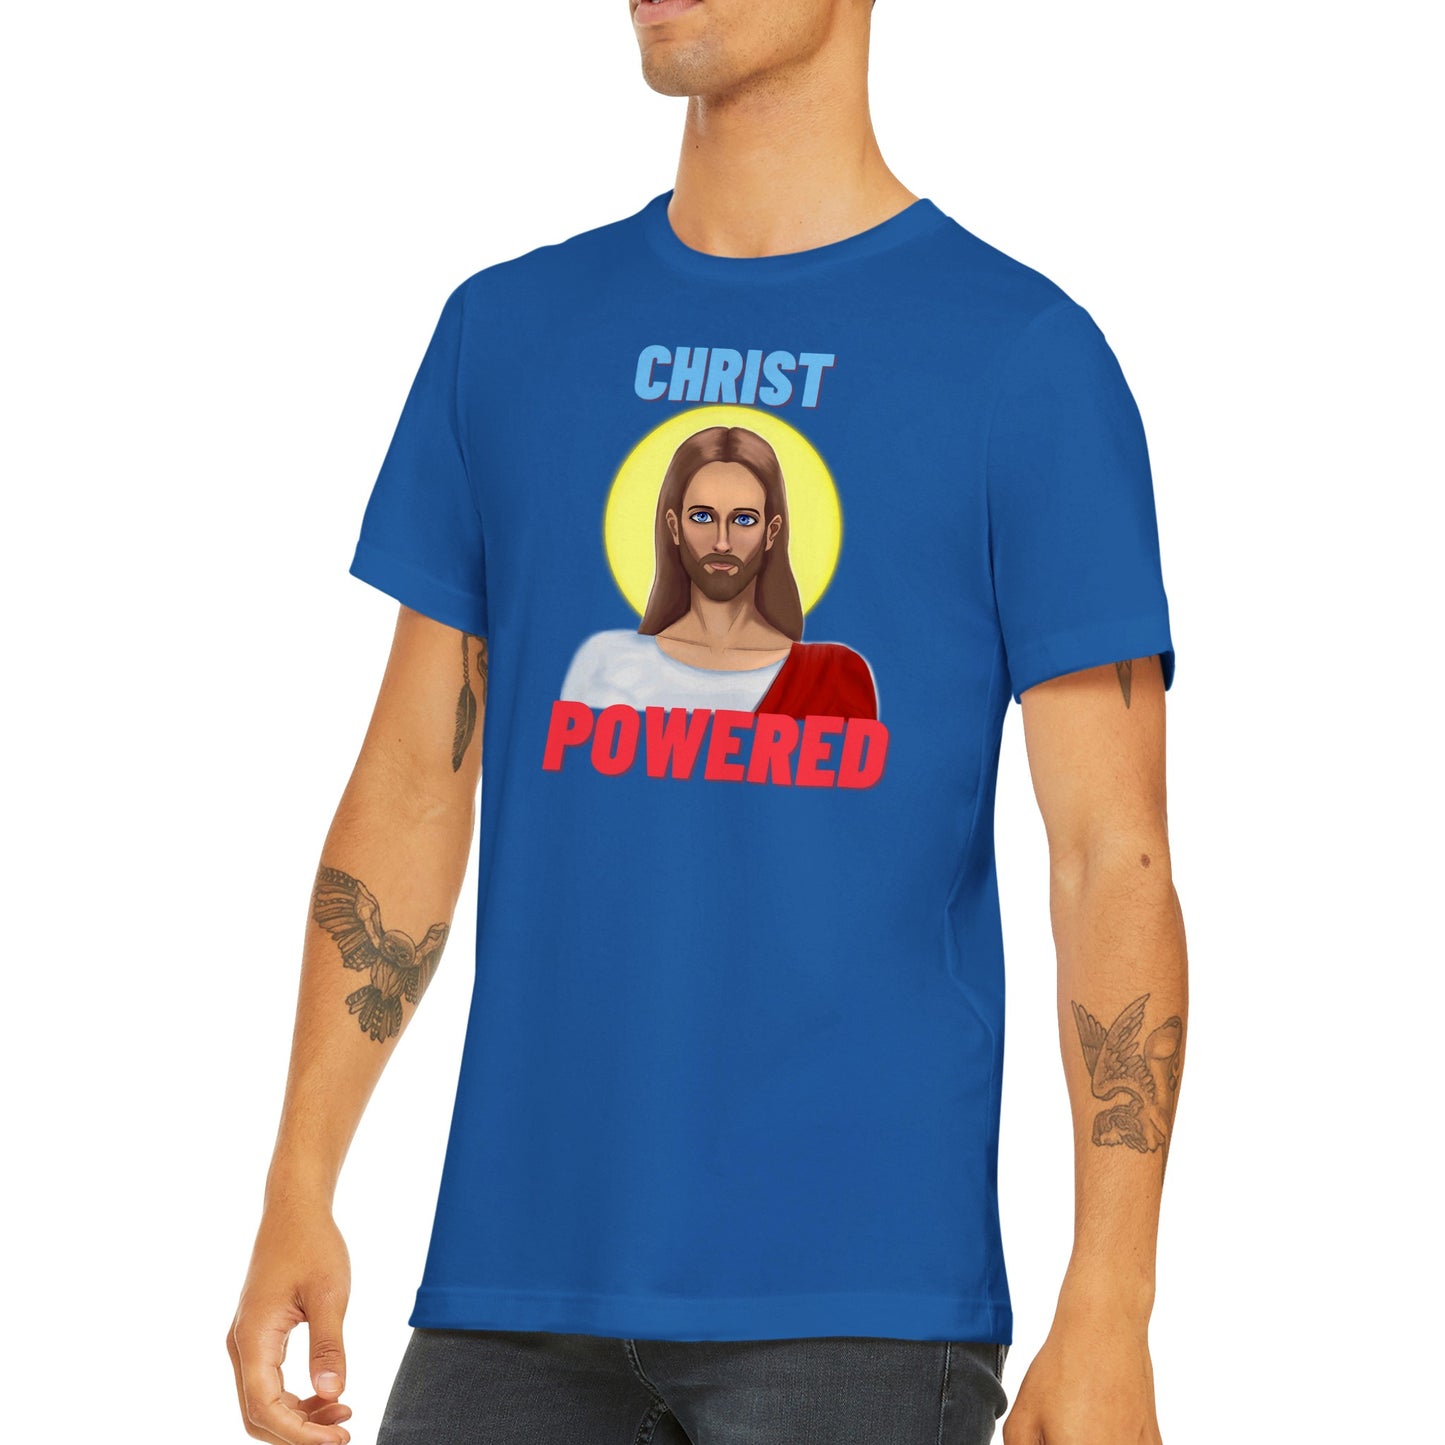 "Christ Powered" Tee